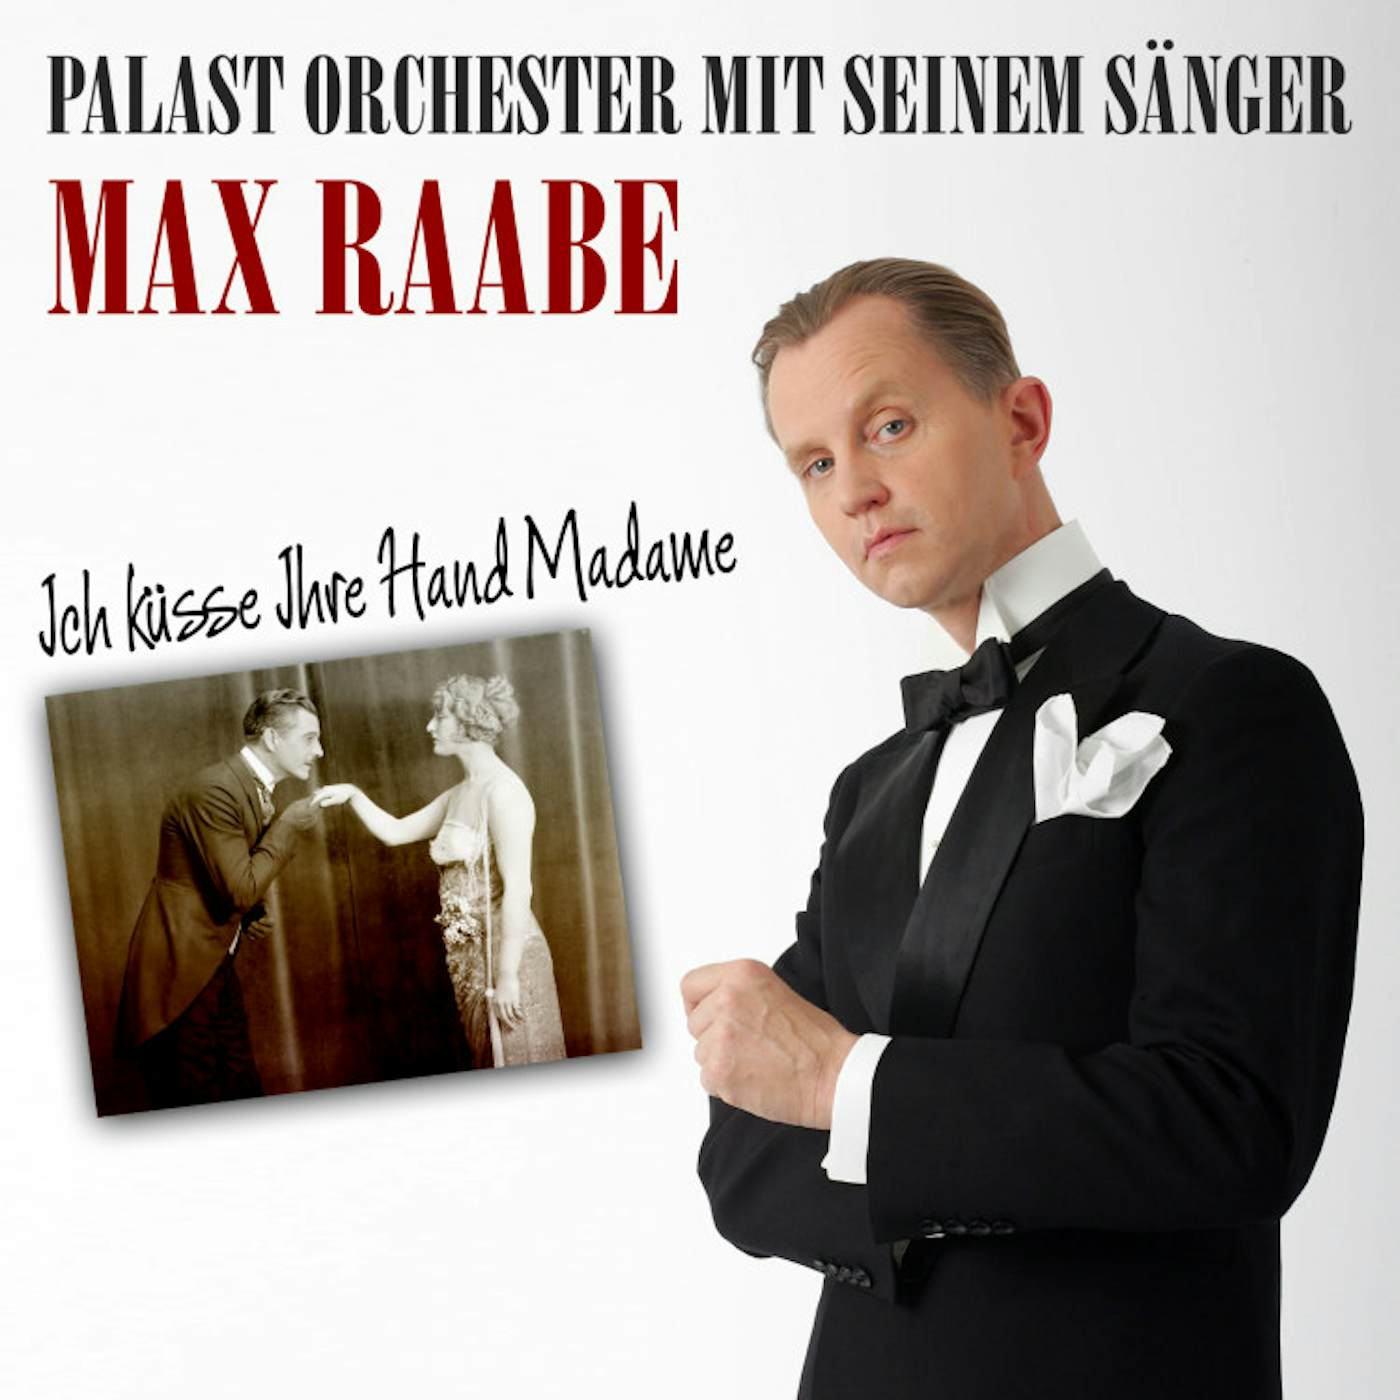 Max Raabe & Palast Orchester ICH KUSSE IHRE HAND MADAME CD